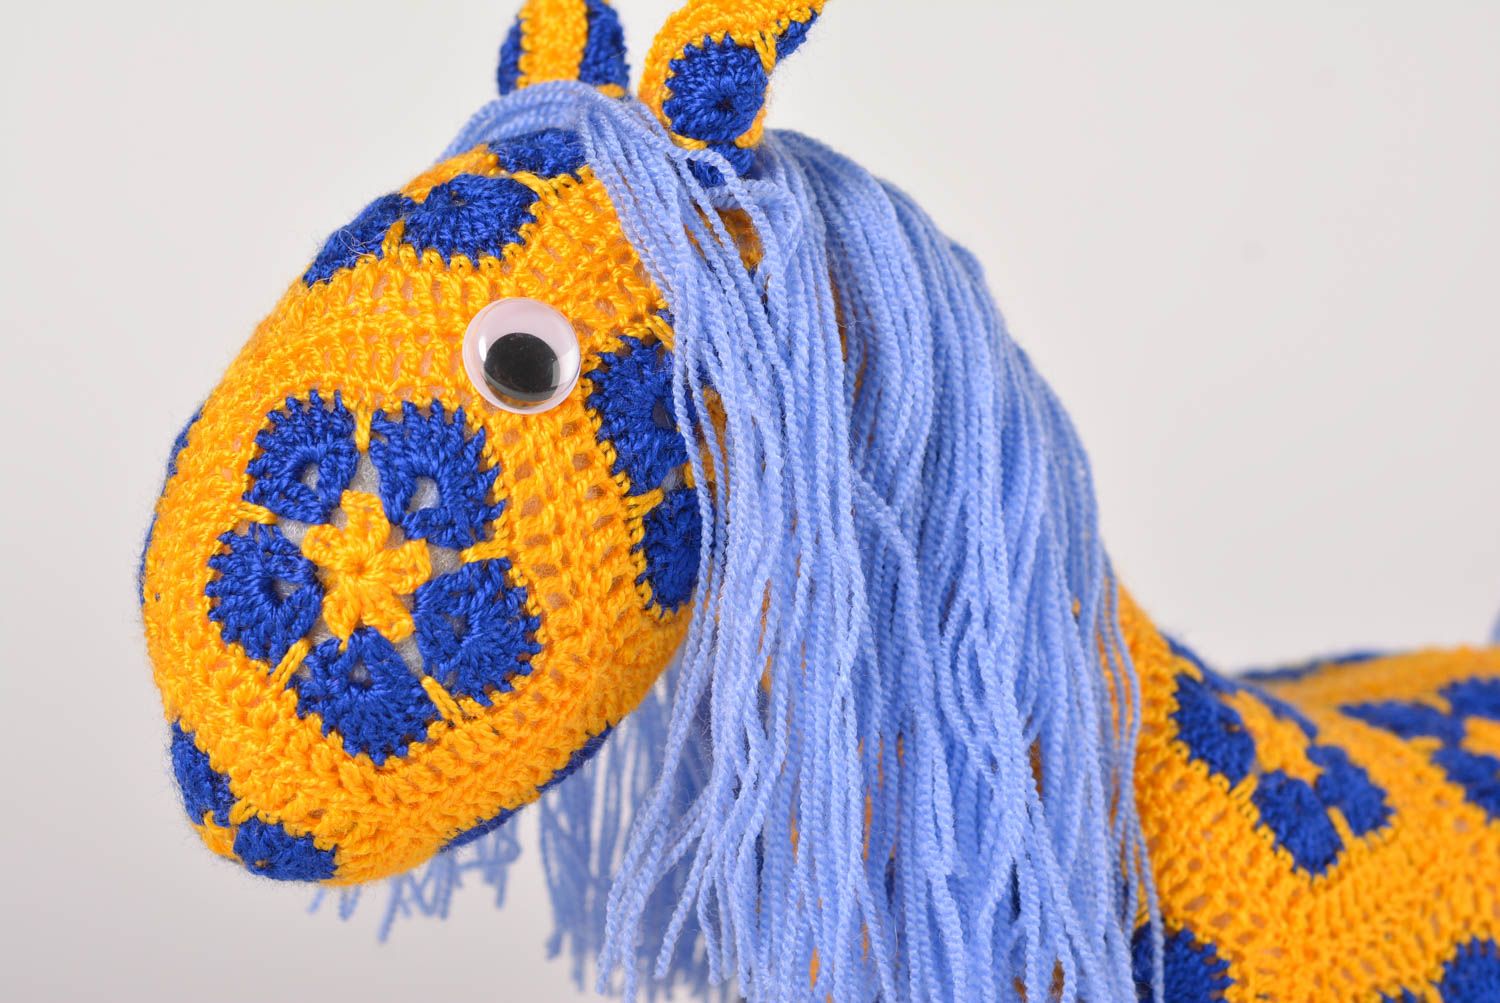 Unusual handmade crochet soft toy horse stuffed toy birthday gift ideas photo 2